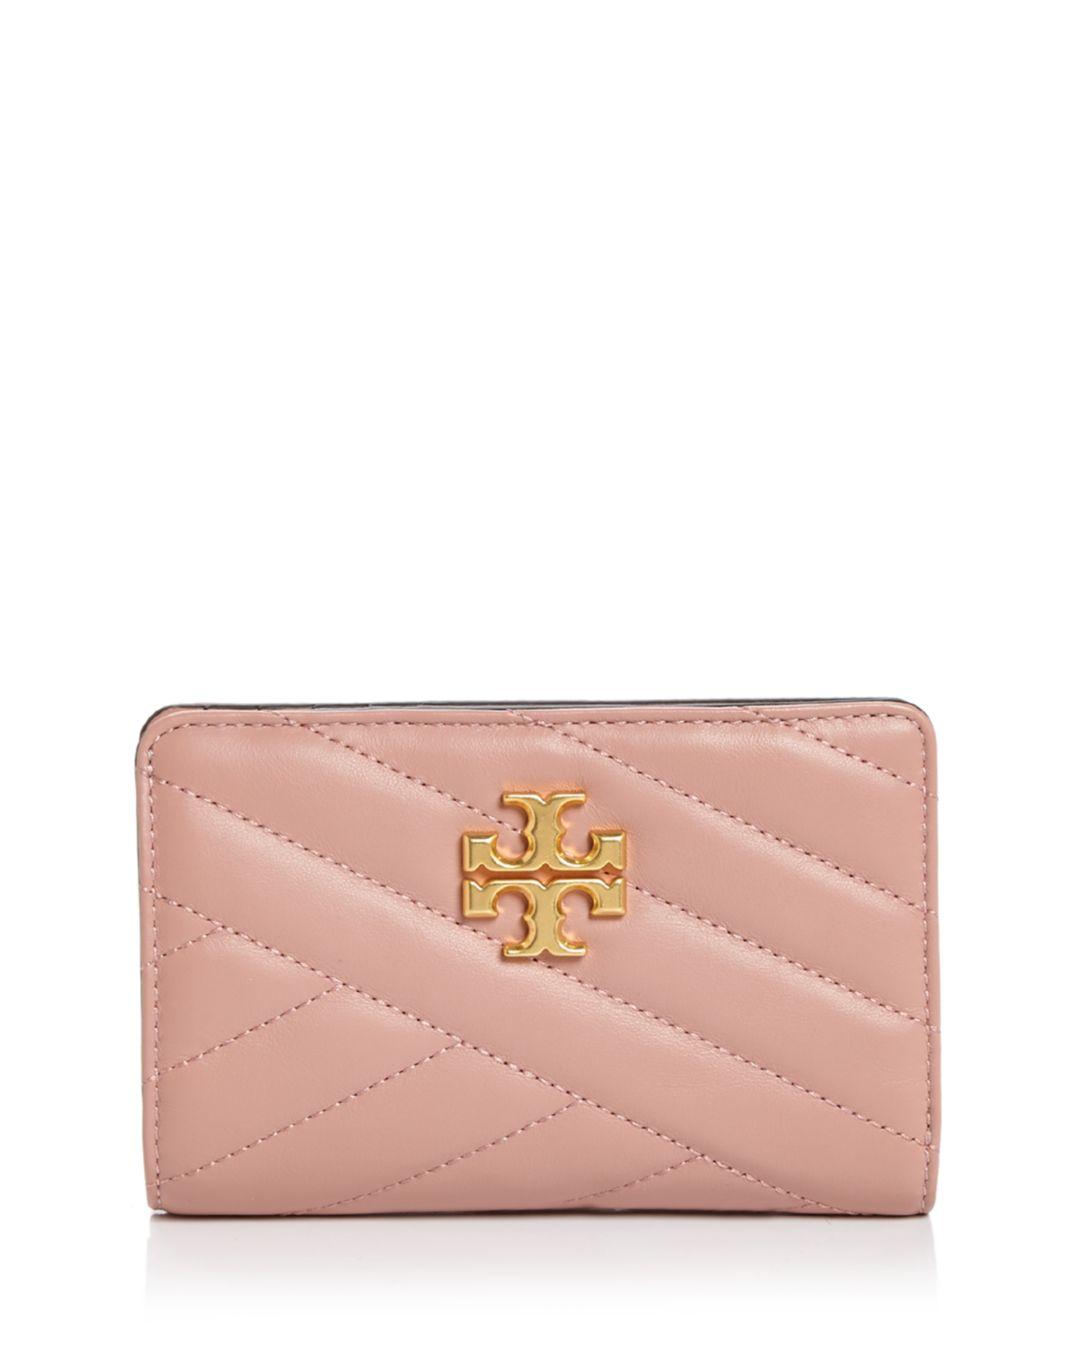 Tory Burch Leather Kira Chevron Medium Slim Wallet in Light Pink (Black ...